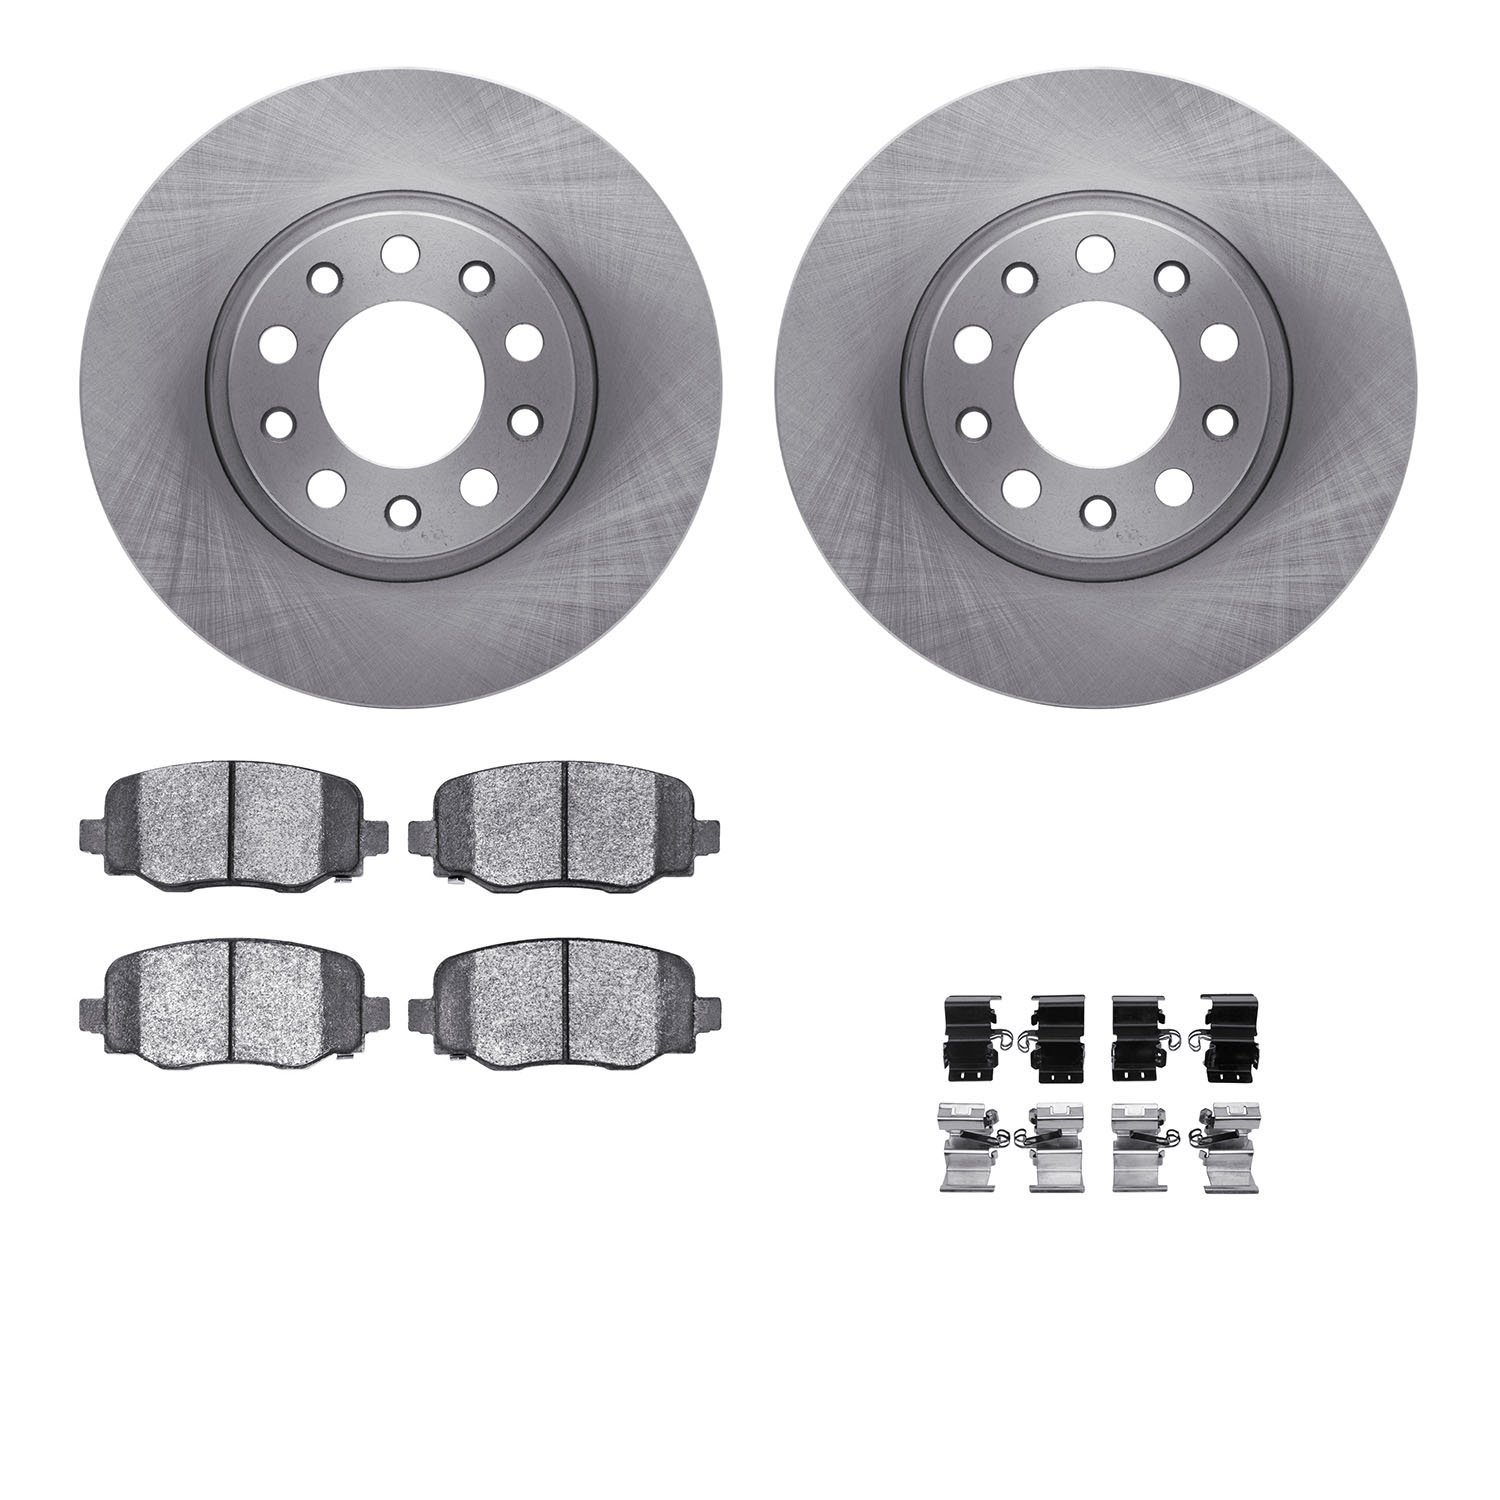 6412-42040 Brake Rotors with Ultimate-Duty Brake Pads Kit & Hardware, Fits Select Mopar, Position: Rear